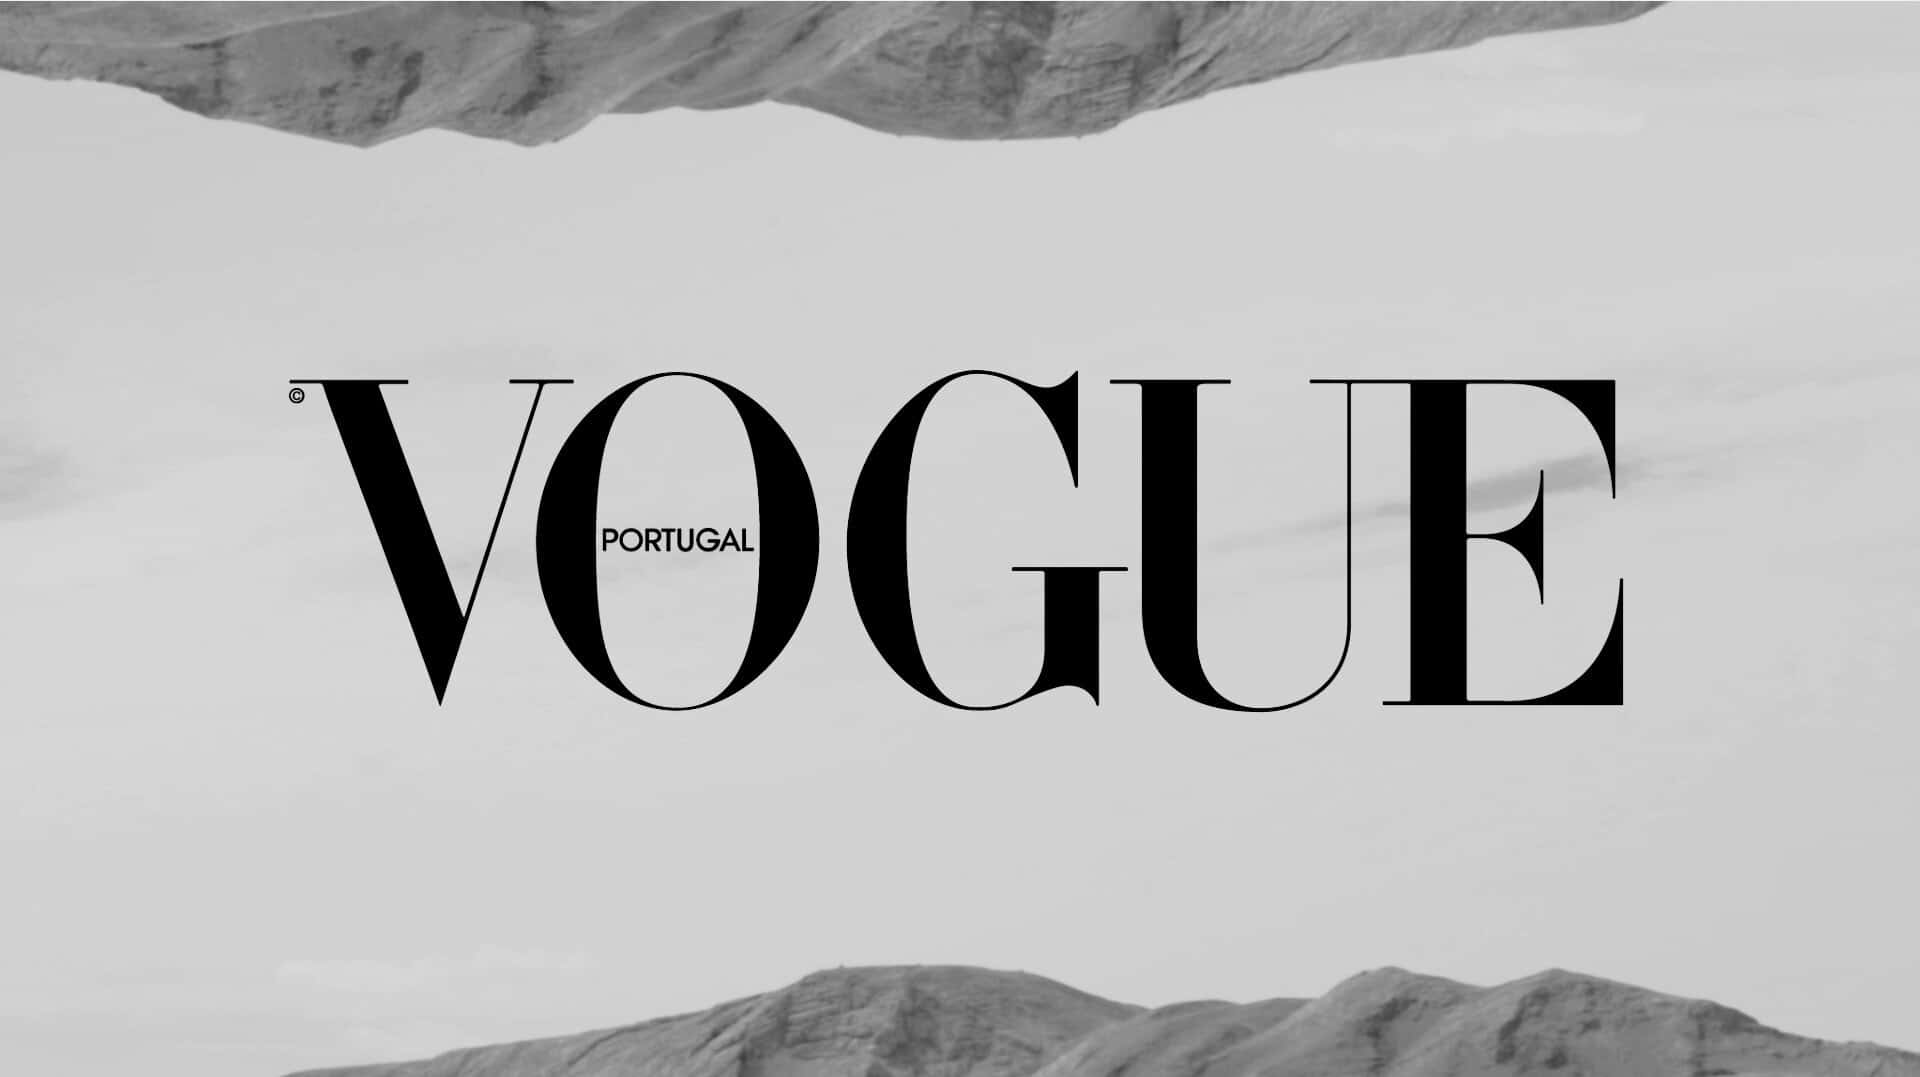 Vogue Portugal Logo Monochrome Wallpaper